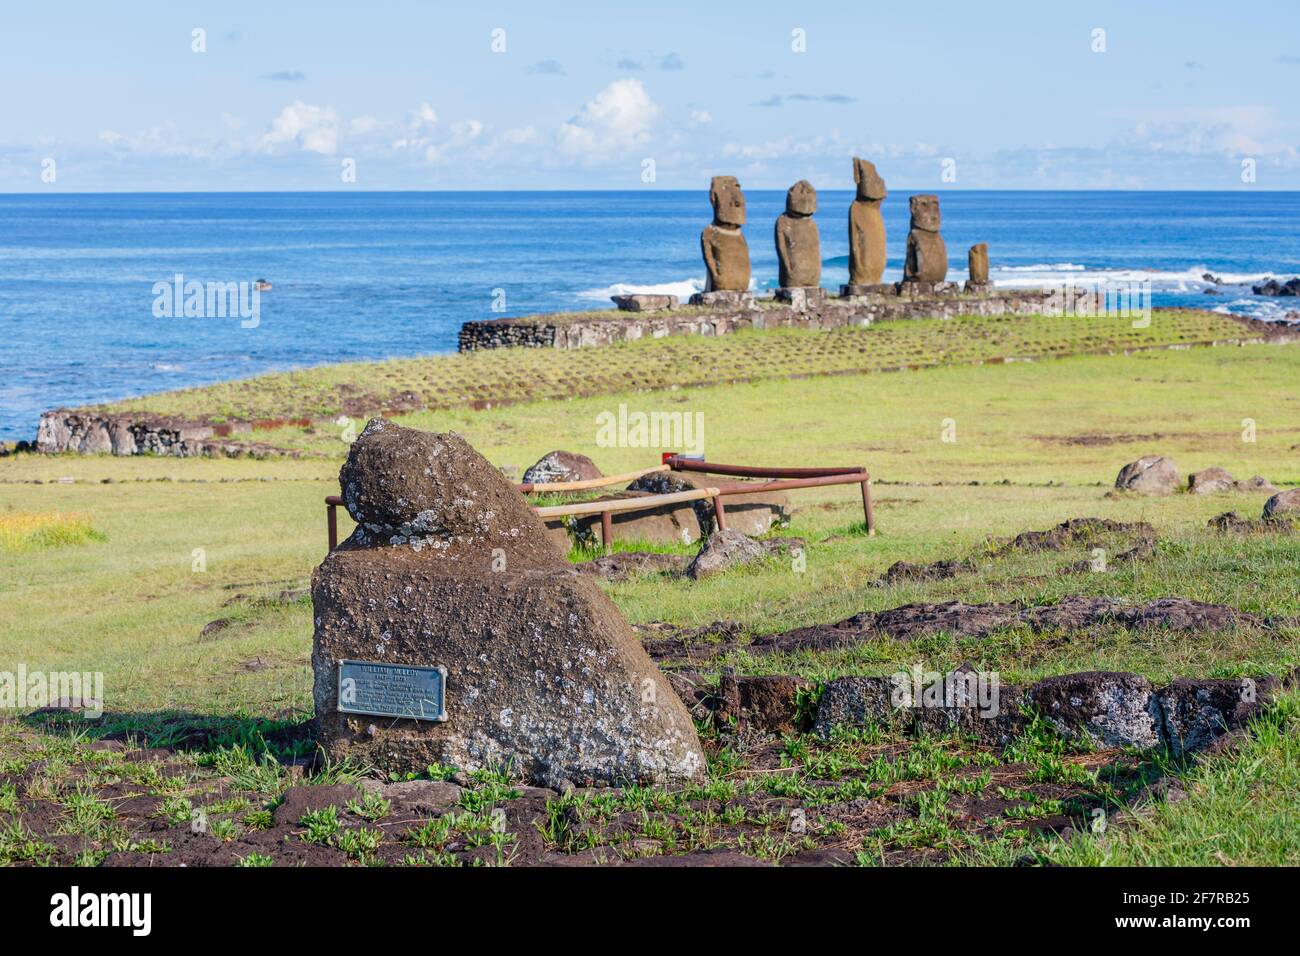 Lapide che commemora l'archeologo William Mulloy al complesso archeologico di Tahai e AHU Vai Ure moai, Hanga Roa, Isola di Pasqua (Rapa Nui), Cile Foto Stock